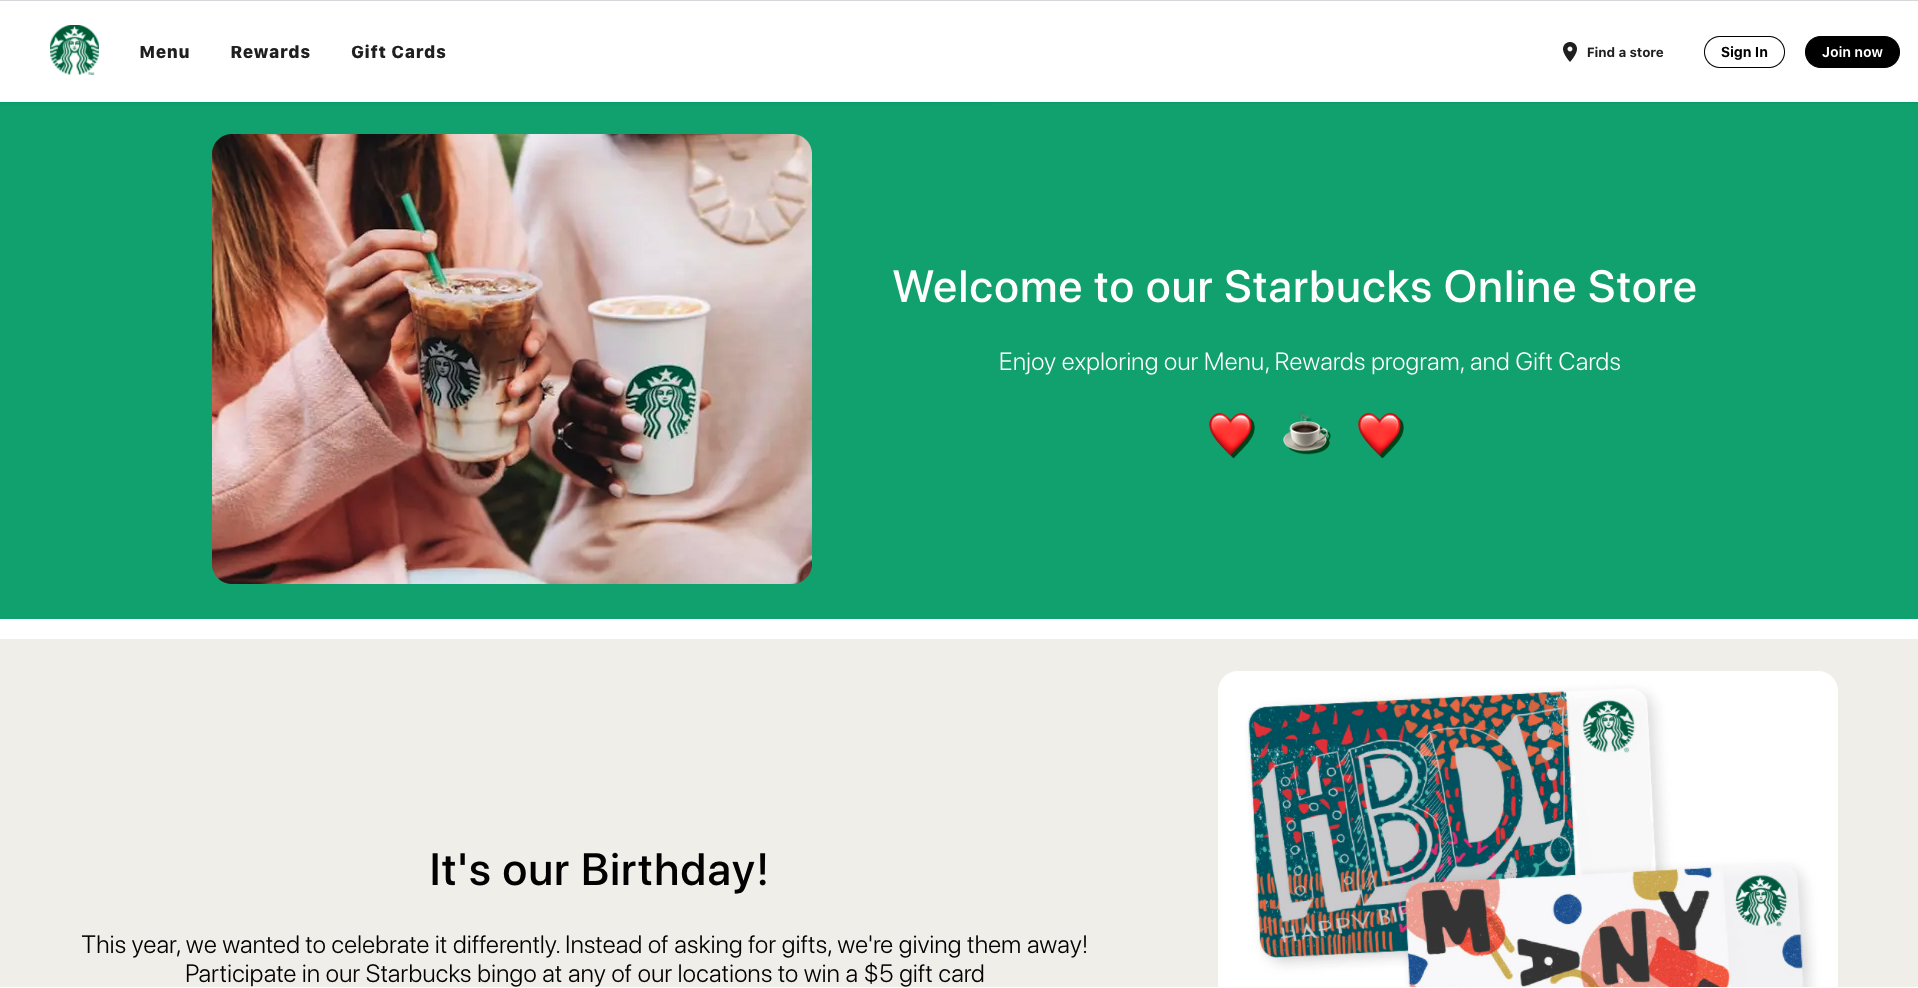 Starbucks Online Store